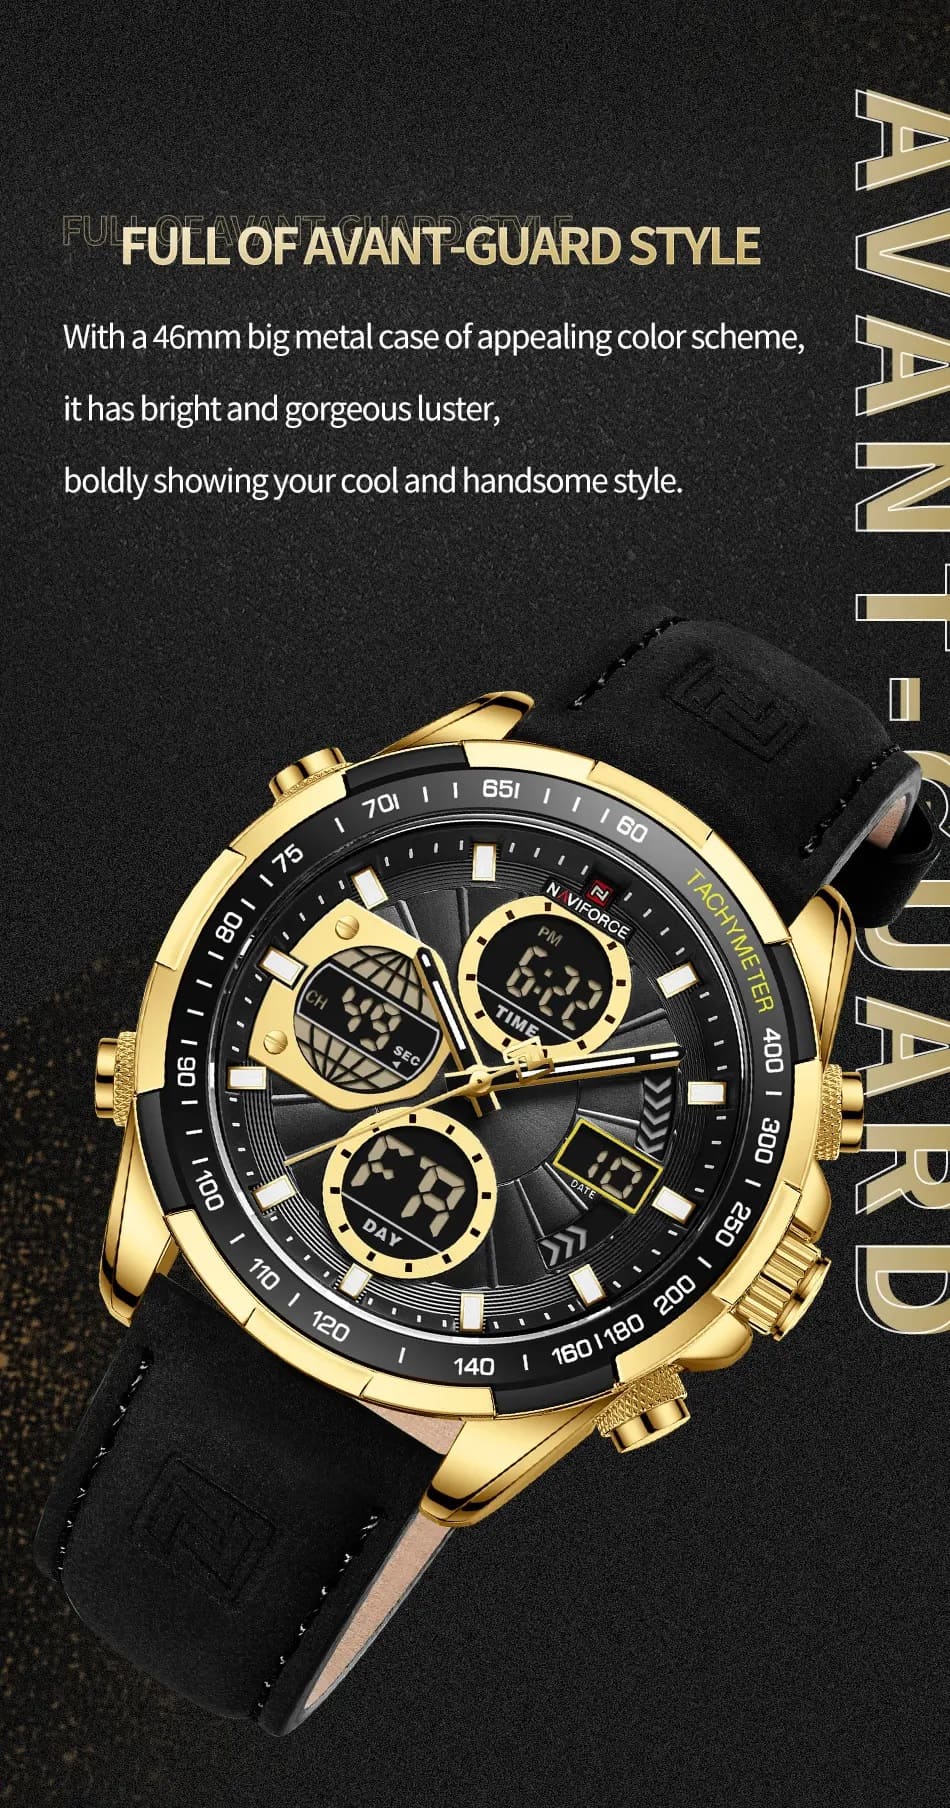 Naviforce Men's Watch NF9197L G B B | Watches Prime